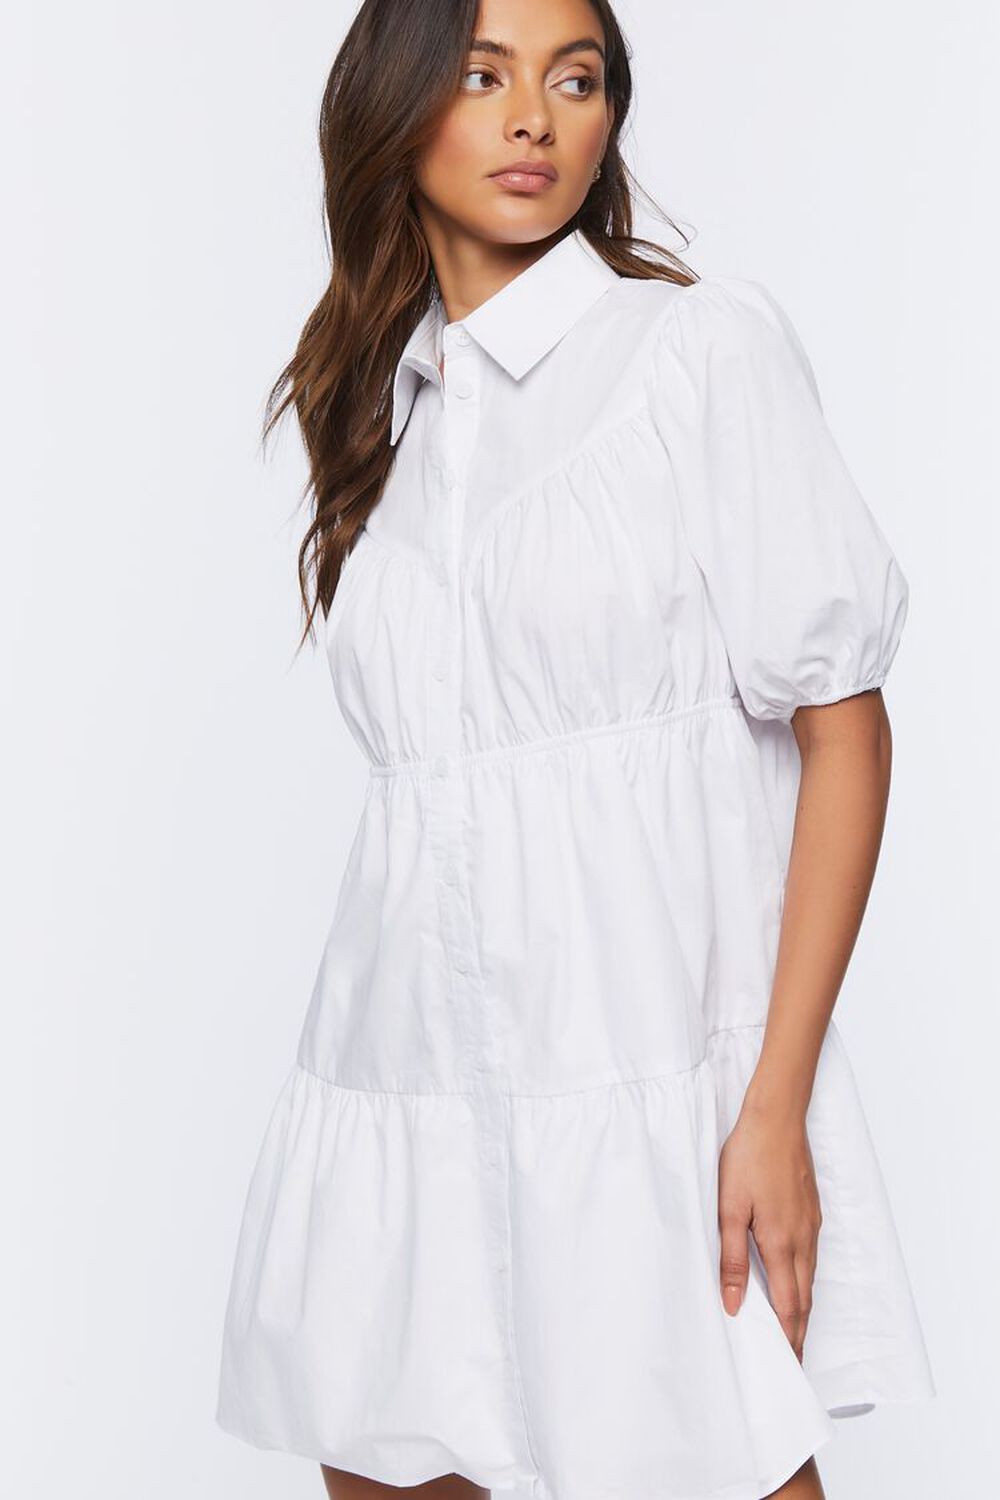 WHITE Tiered Mini Shirt Dress, image 1